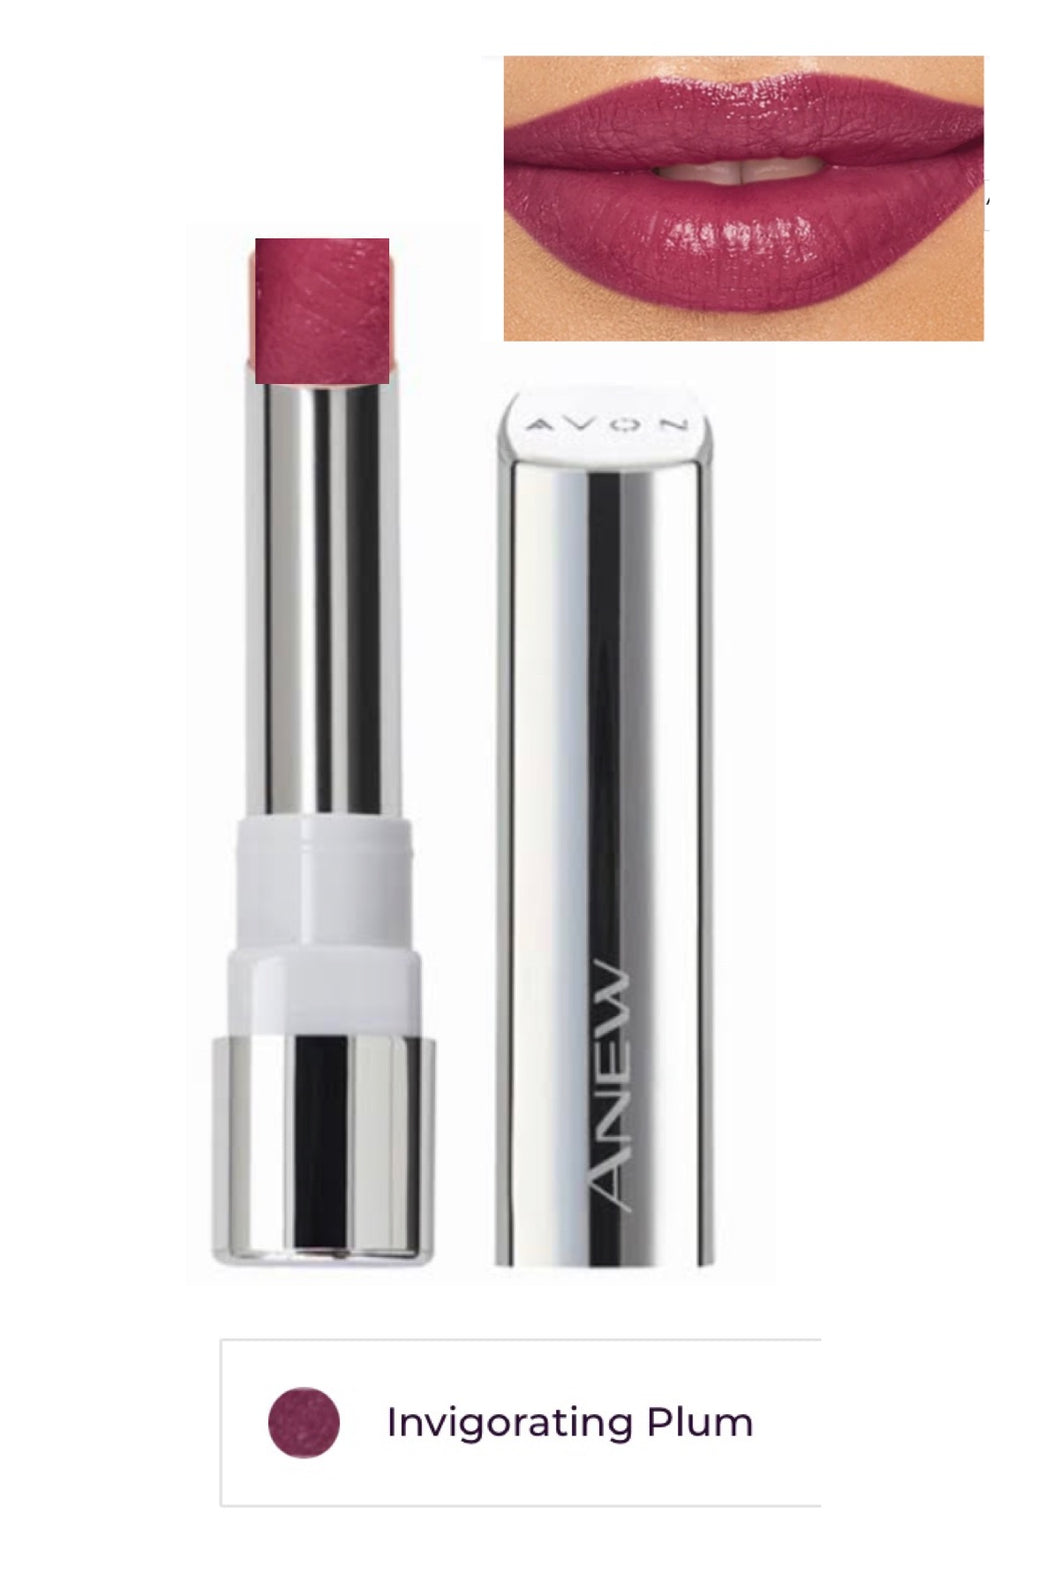 Invigorating plum Anew Revival Serum Lipstick